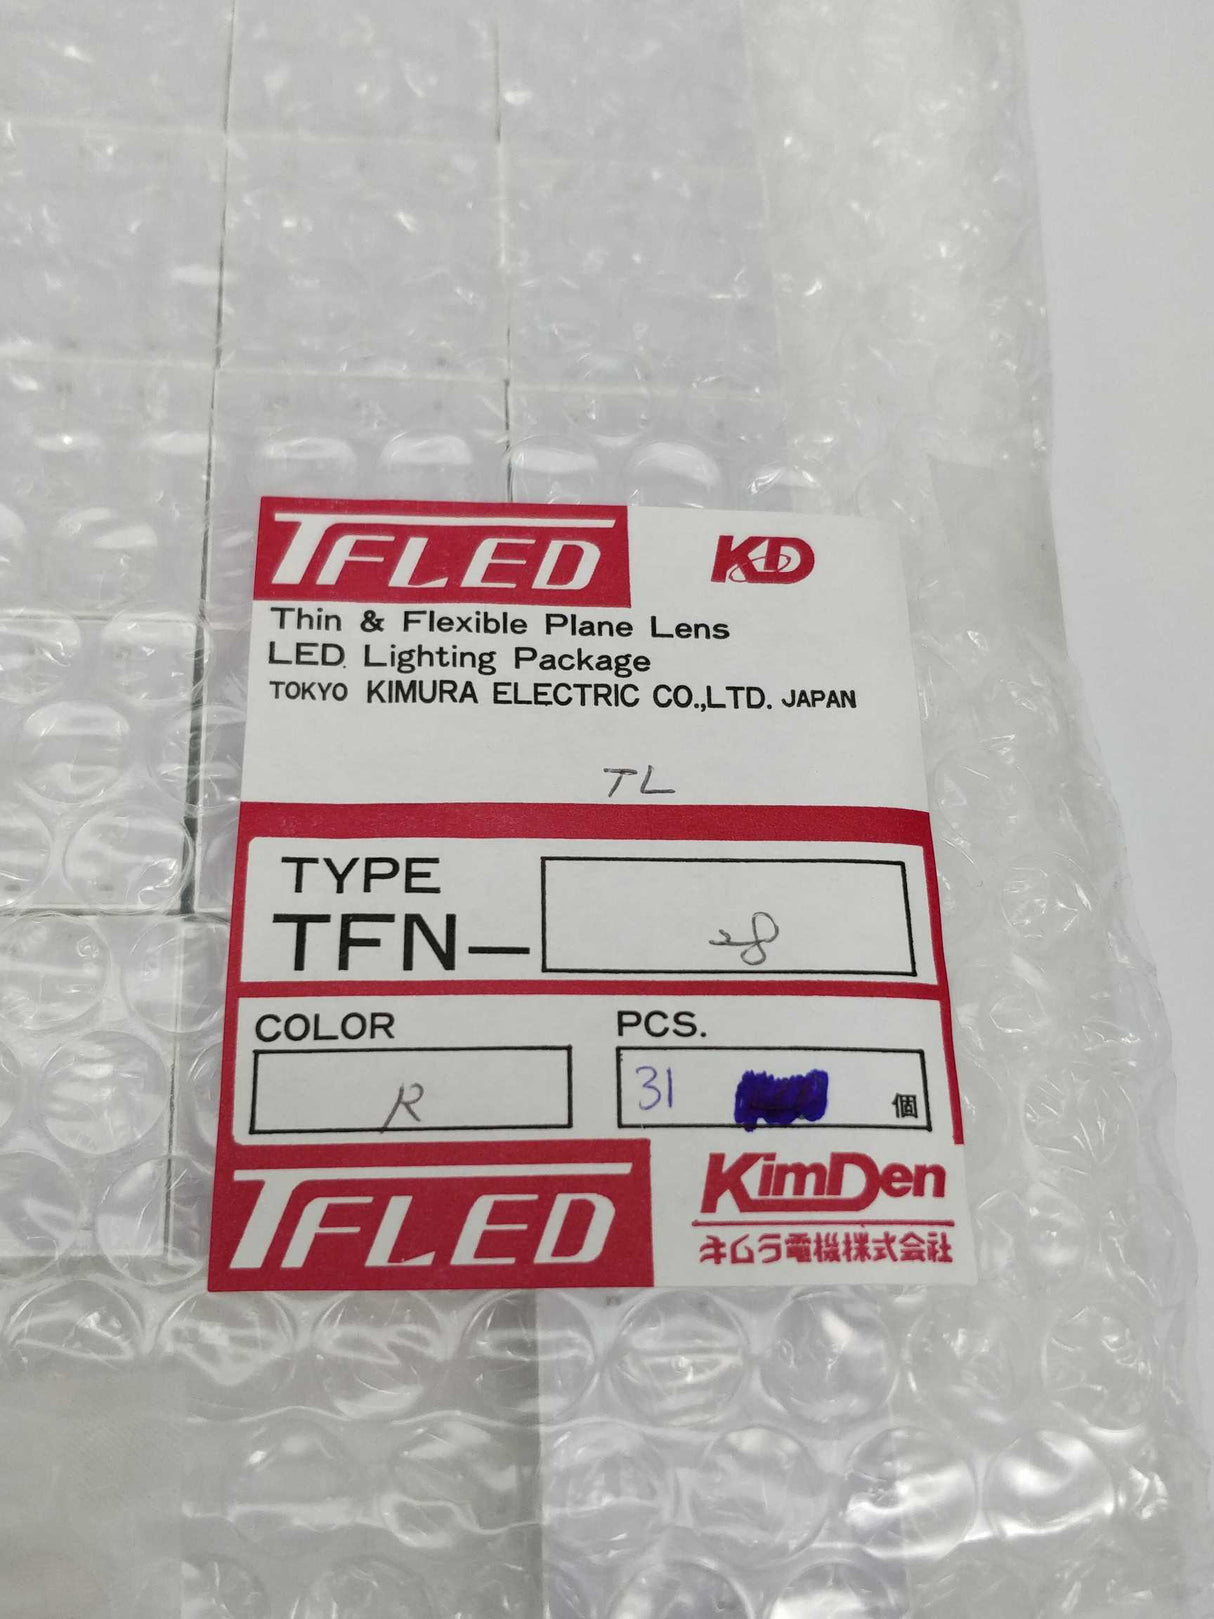 KimDen TF-28 R TL TFLED thin & flexible plane lens TFN-28